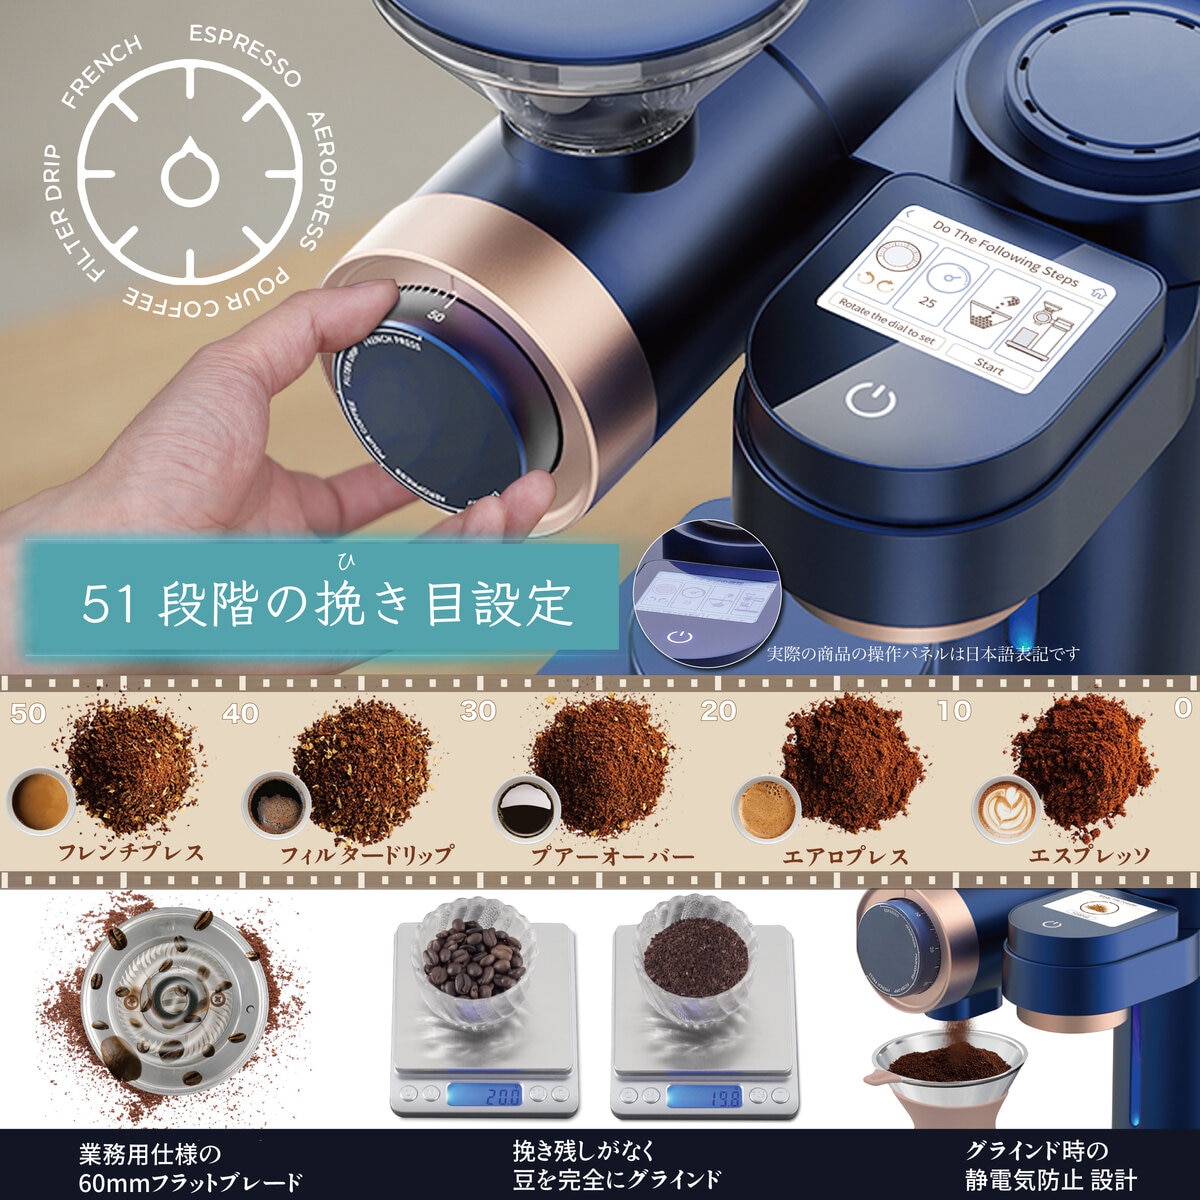 GEVI 1台4役 スマート コーヒーメーカー | Costco Japan